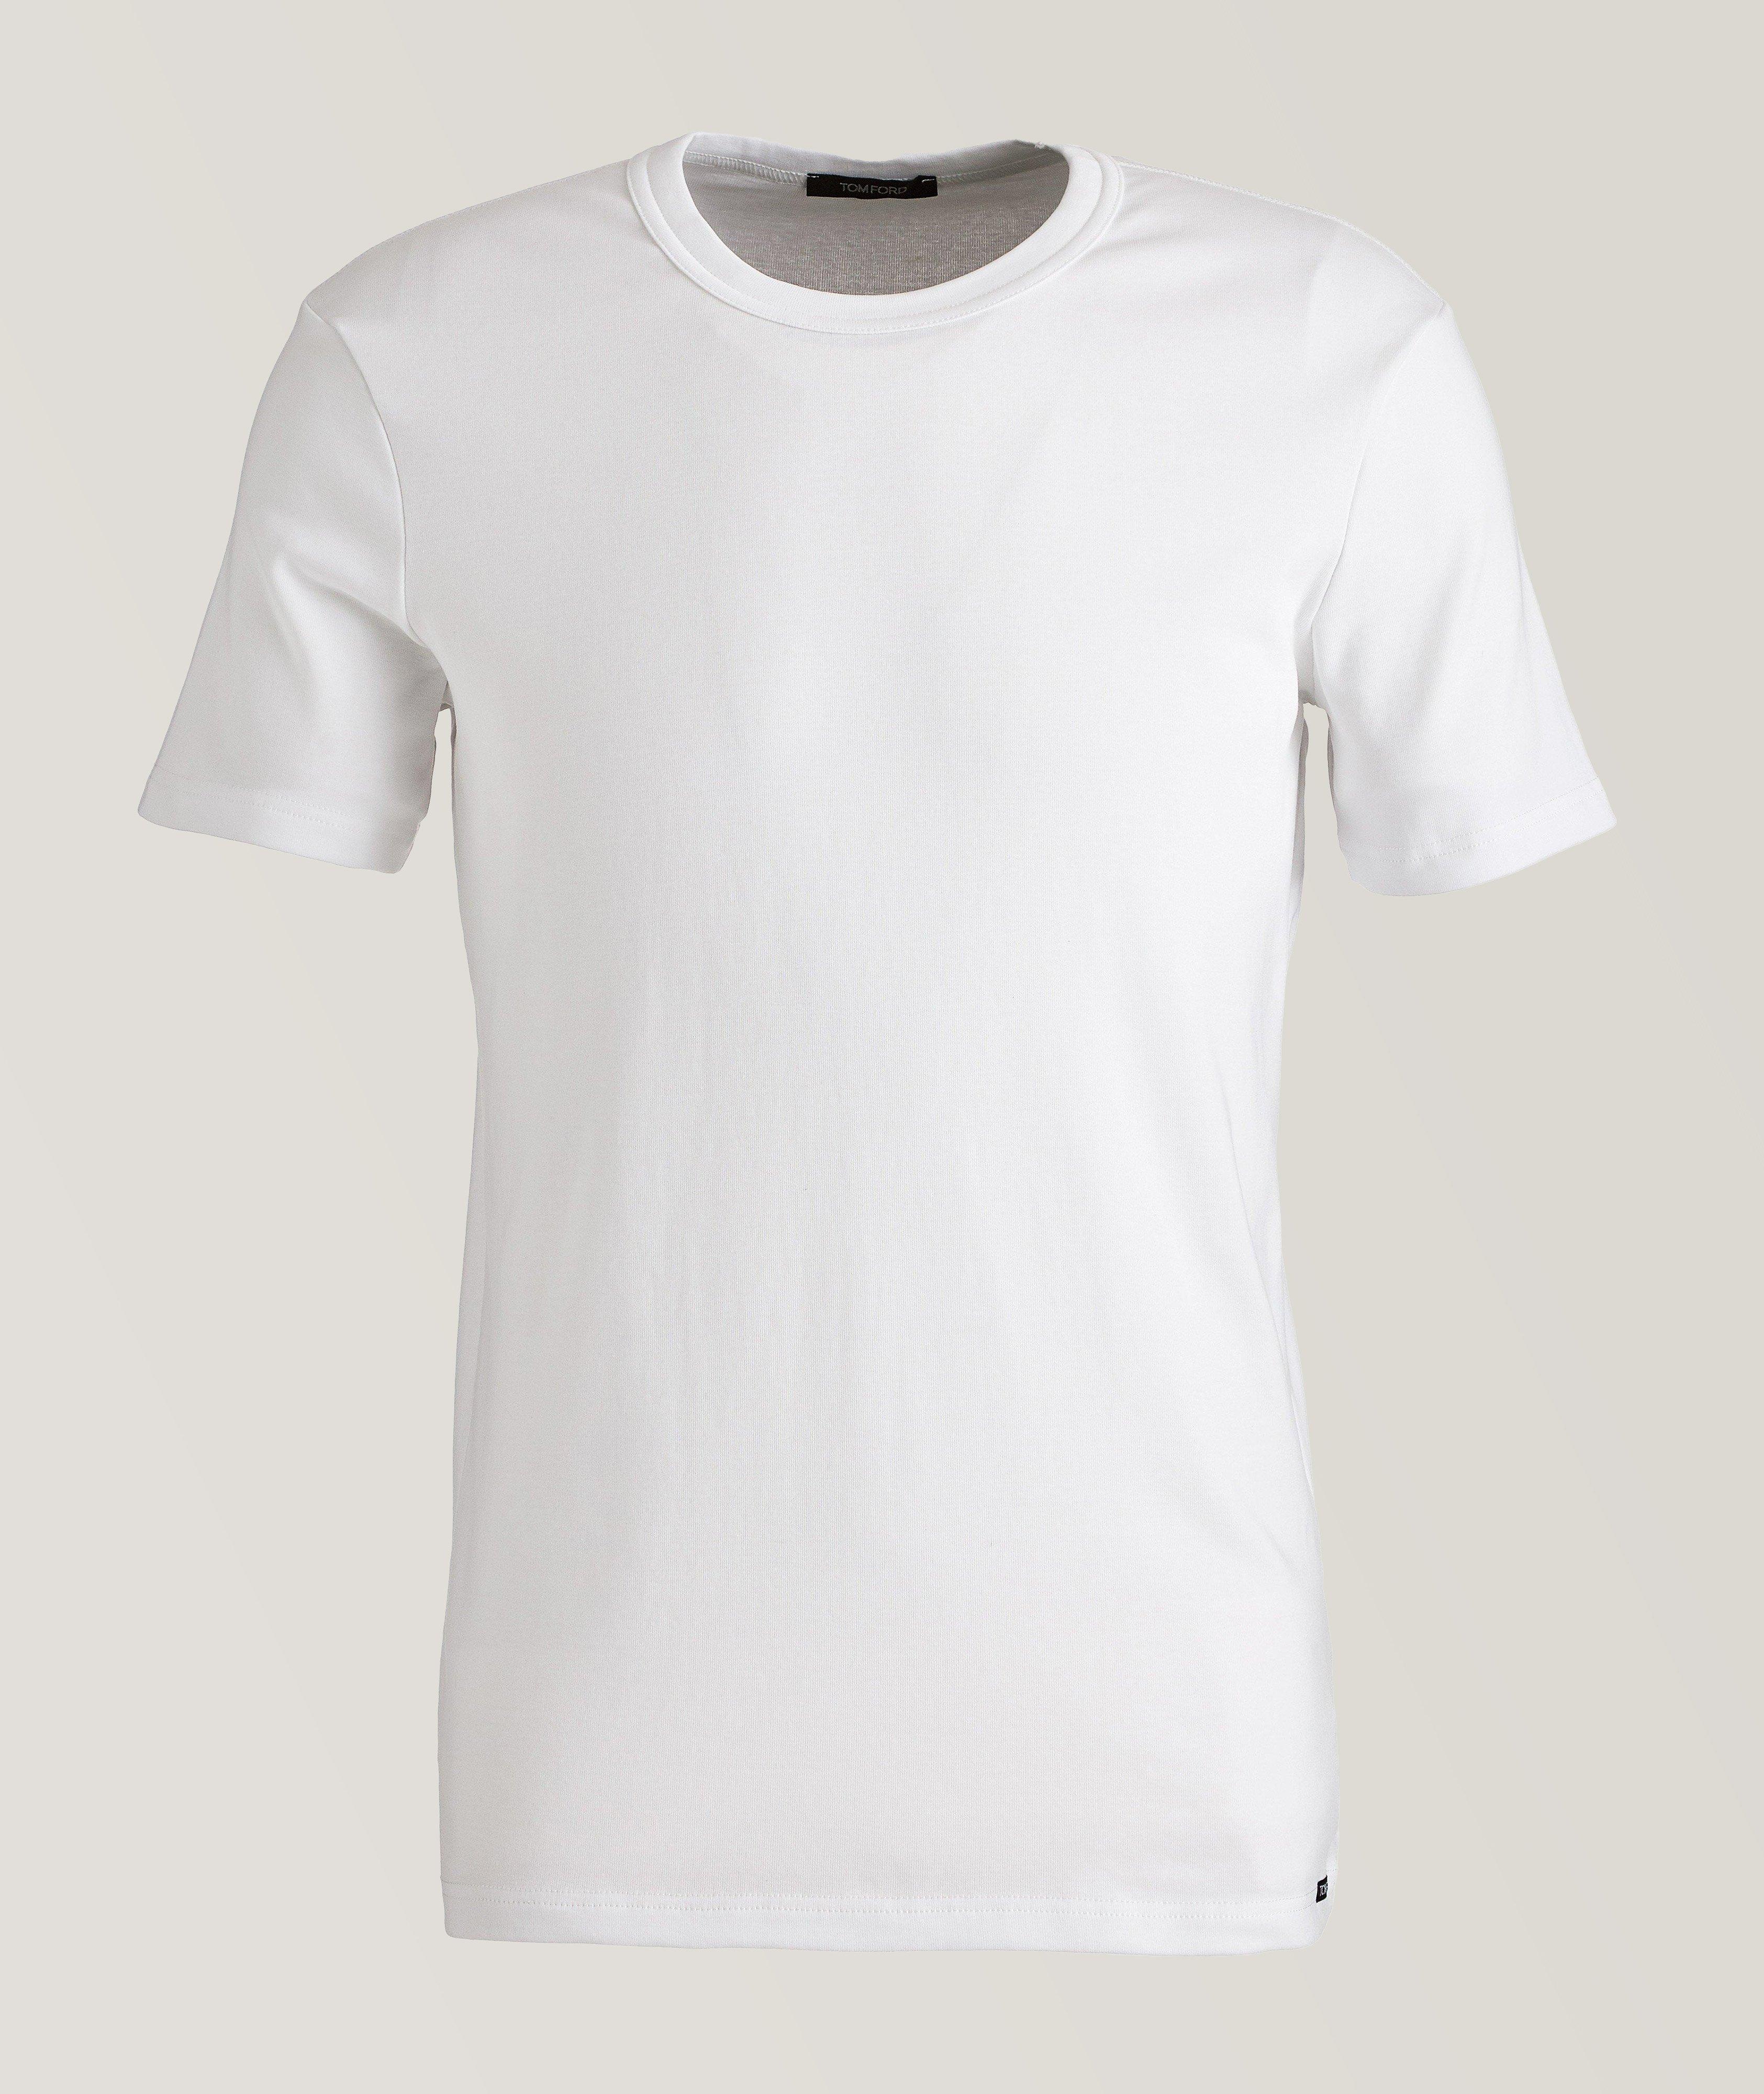 Stretch-Cotton T-Shirt image 0